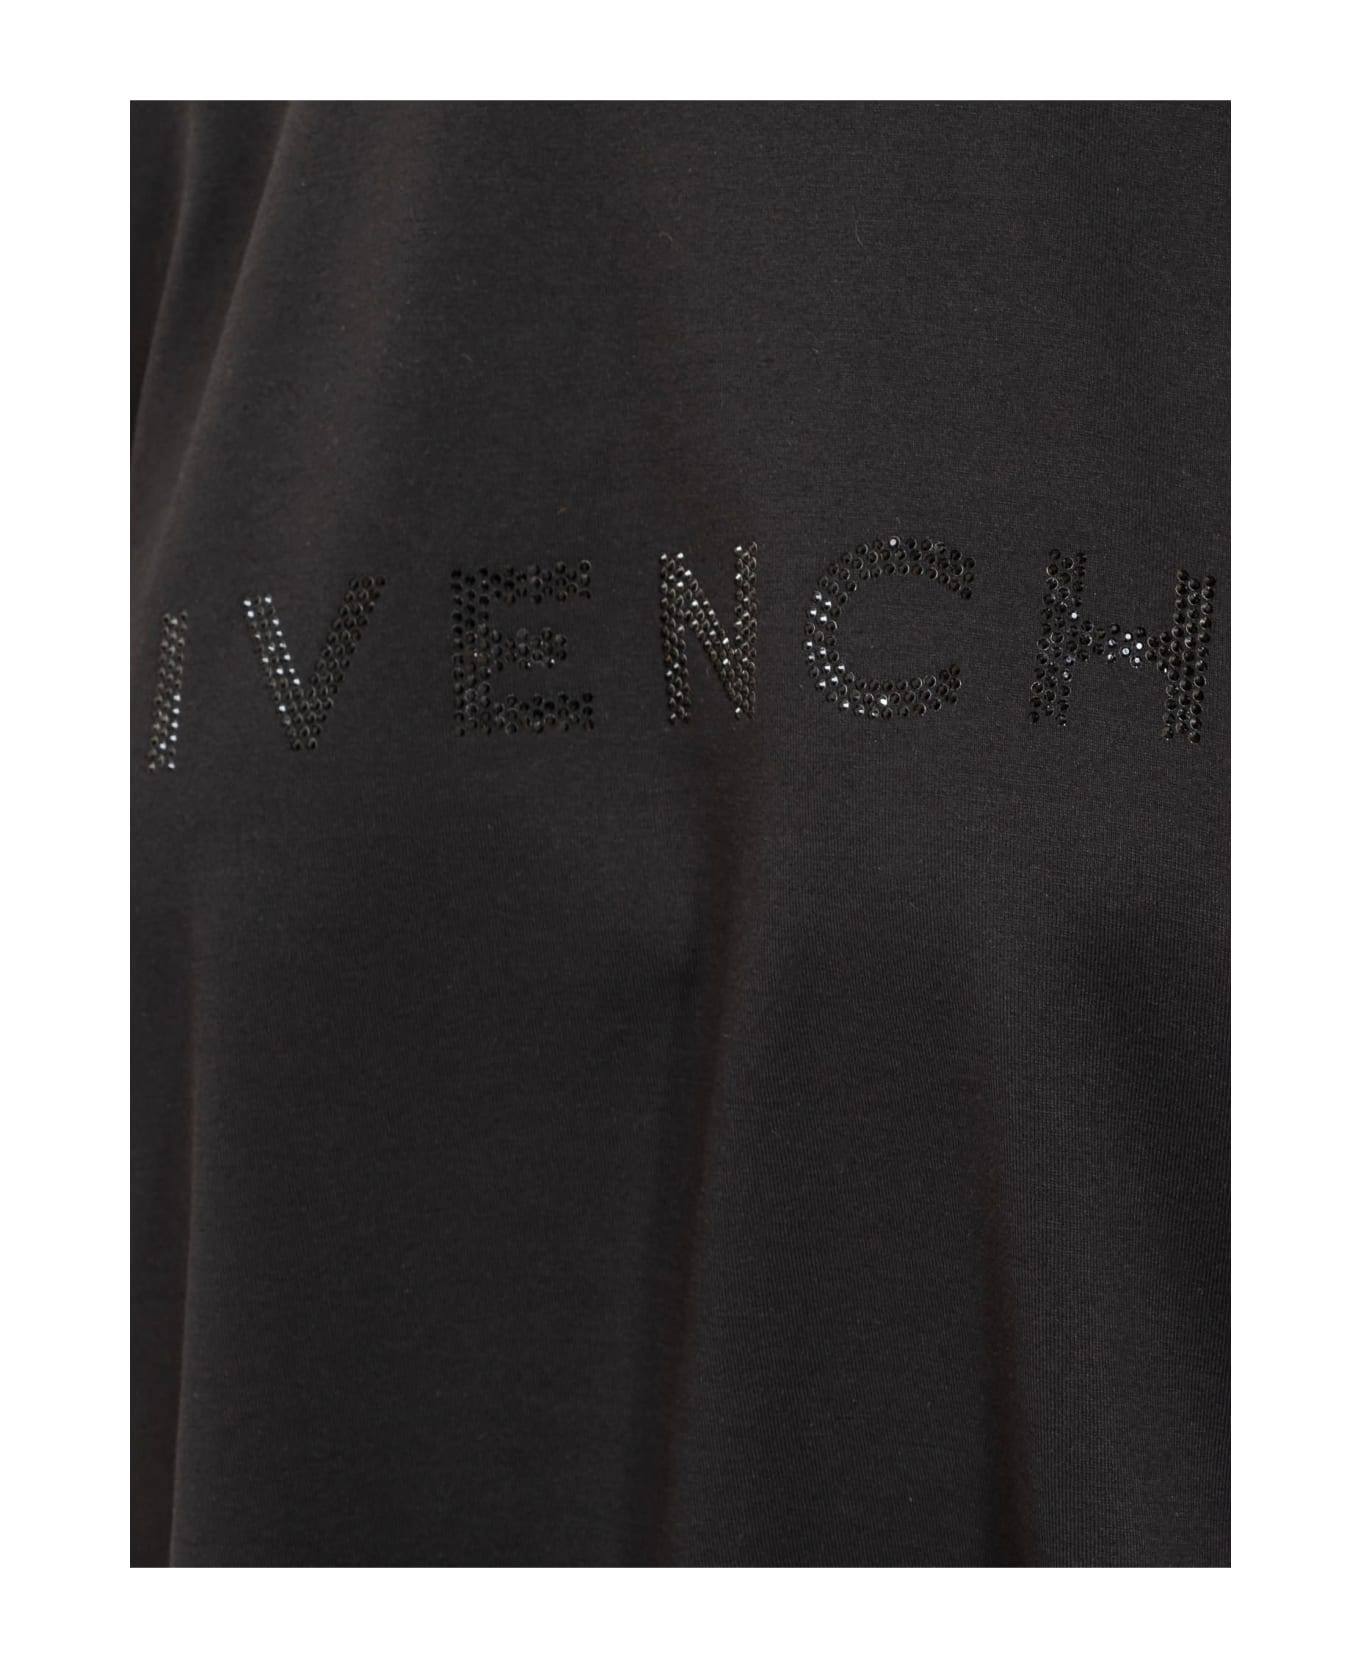 Givenchy Rhinestone T-shirt - Black Tシャツ